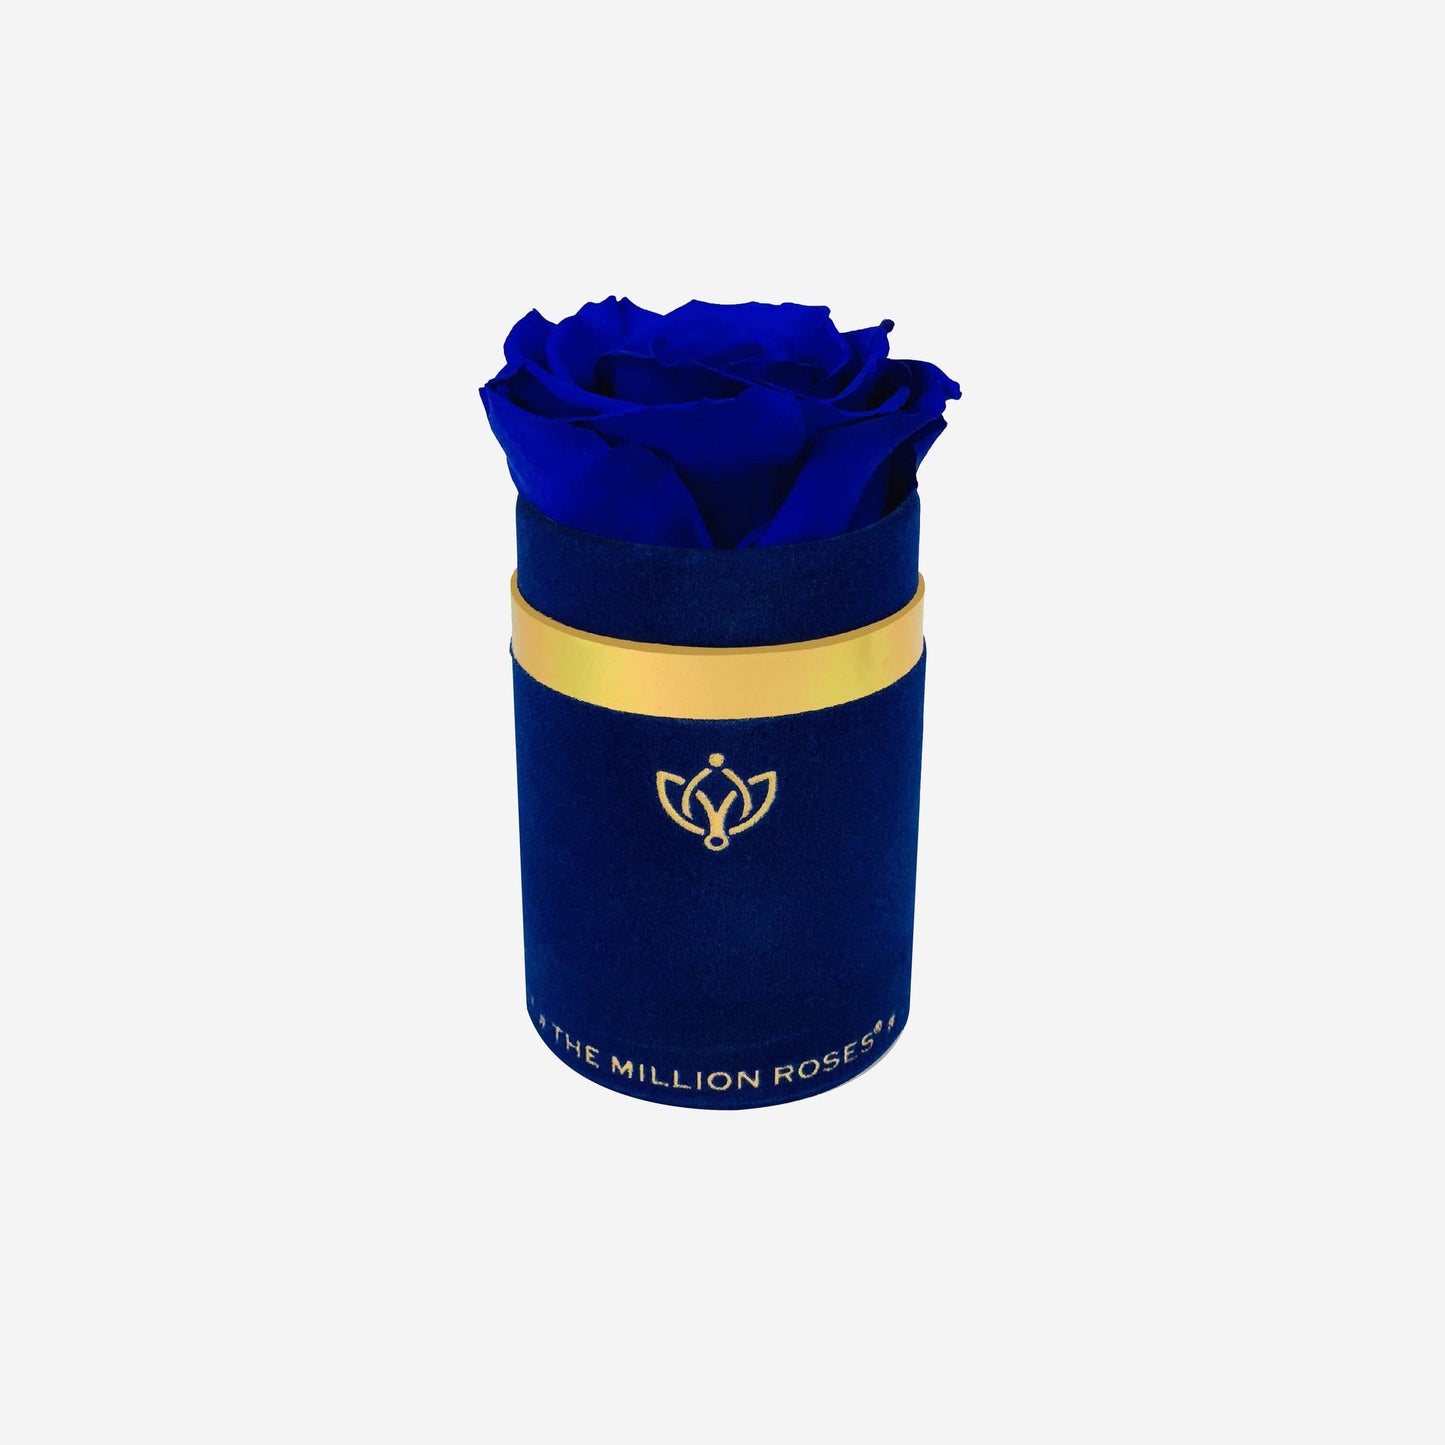 Single Royal Blue Suede Box | Royal Blue Rose - The Million Roses